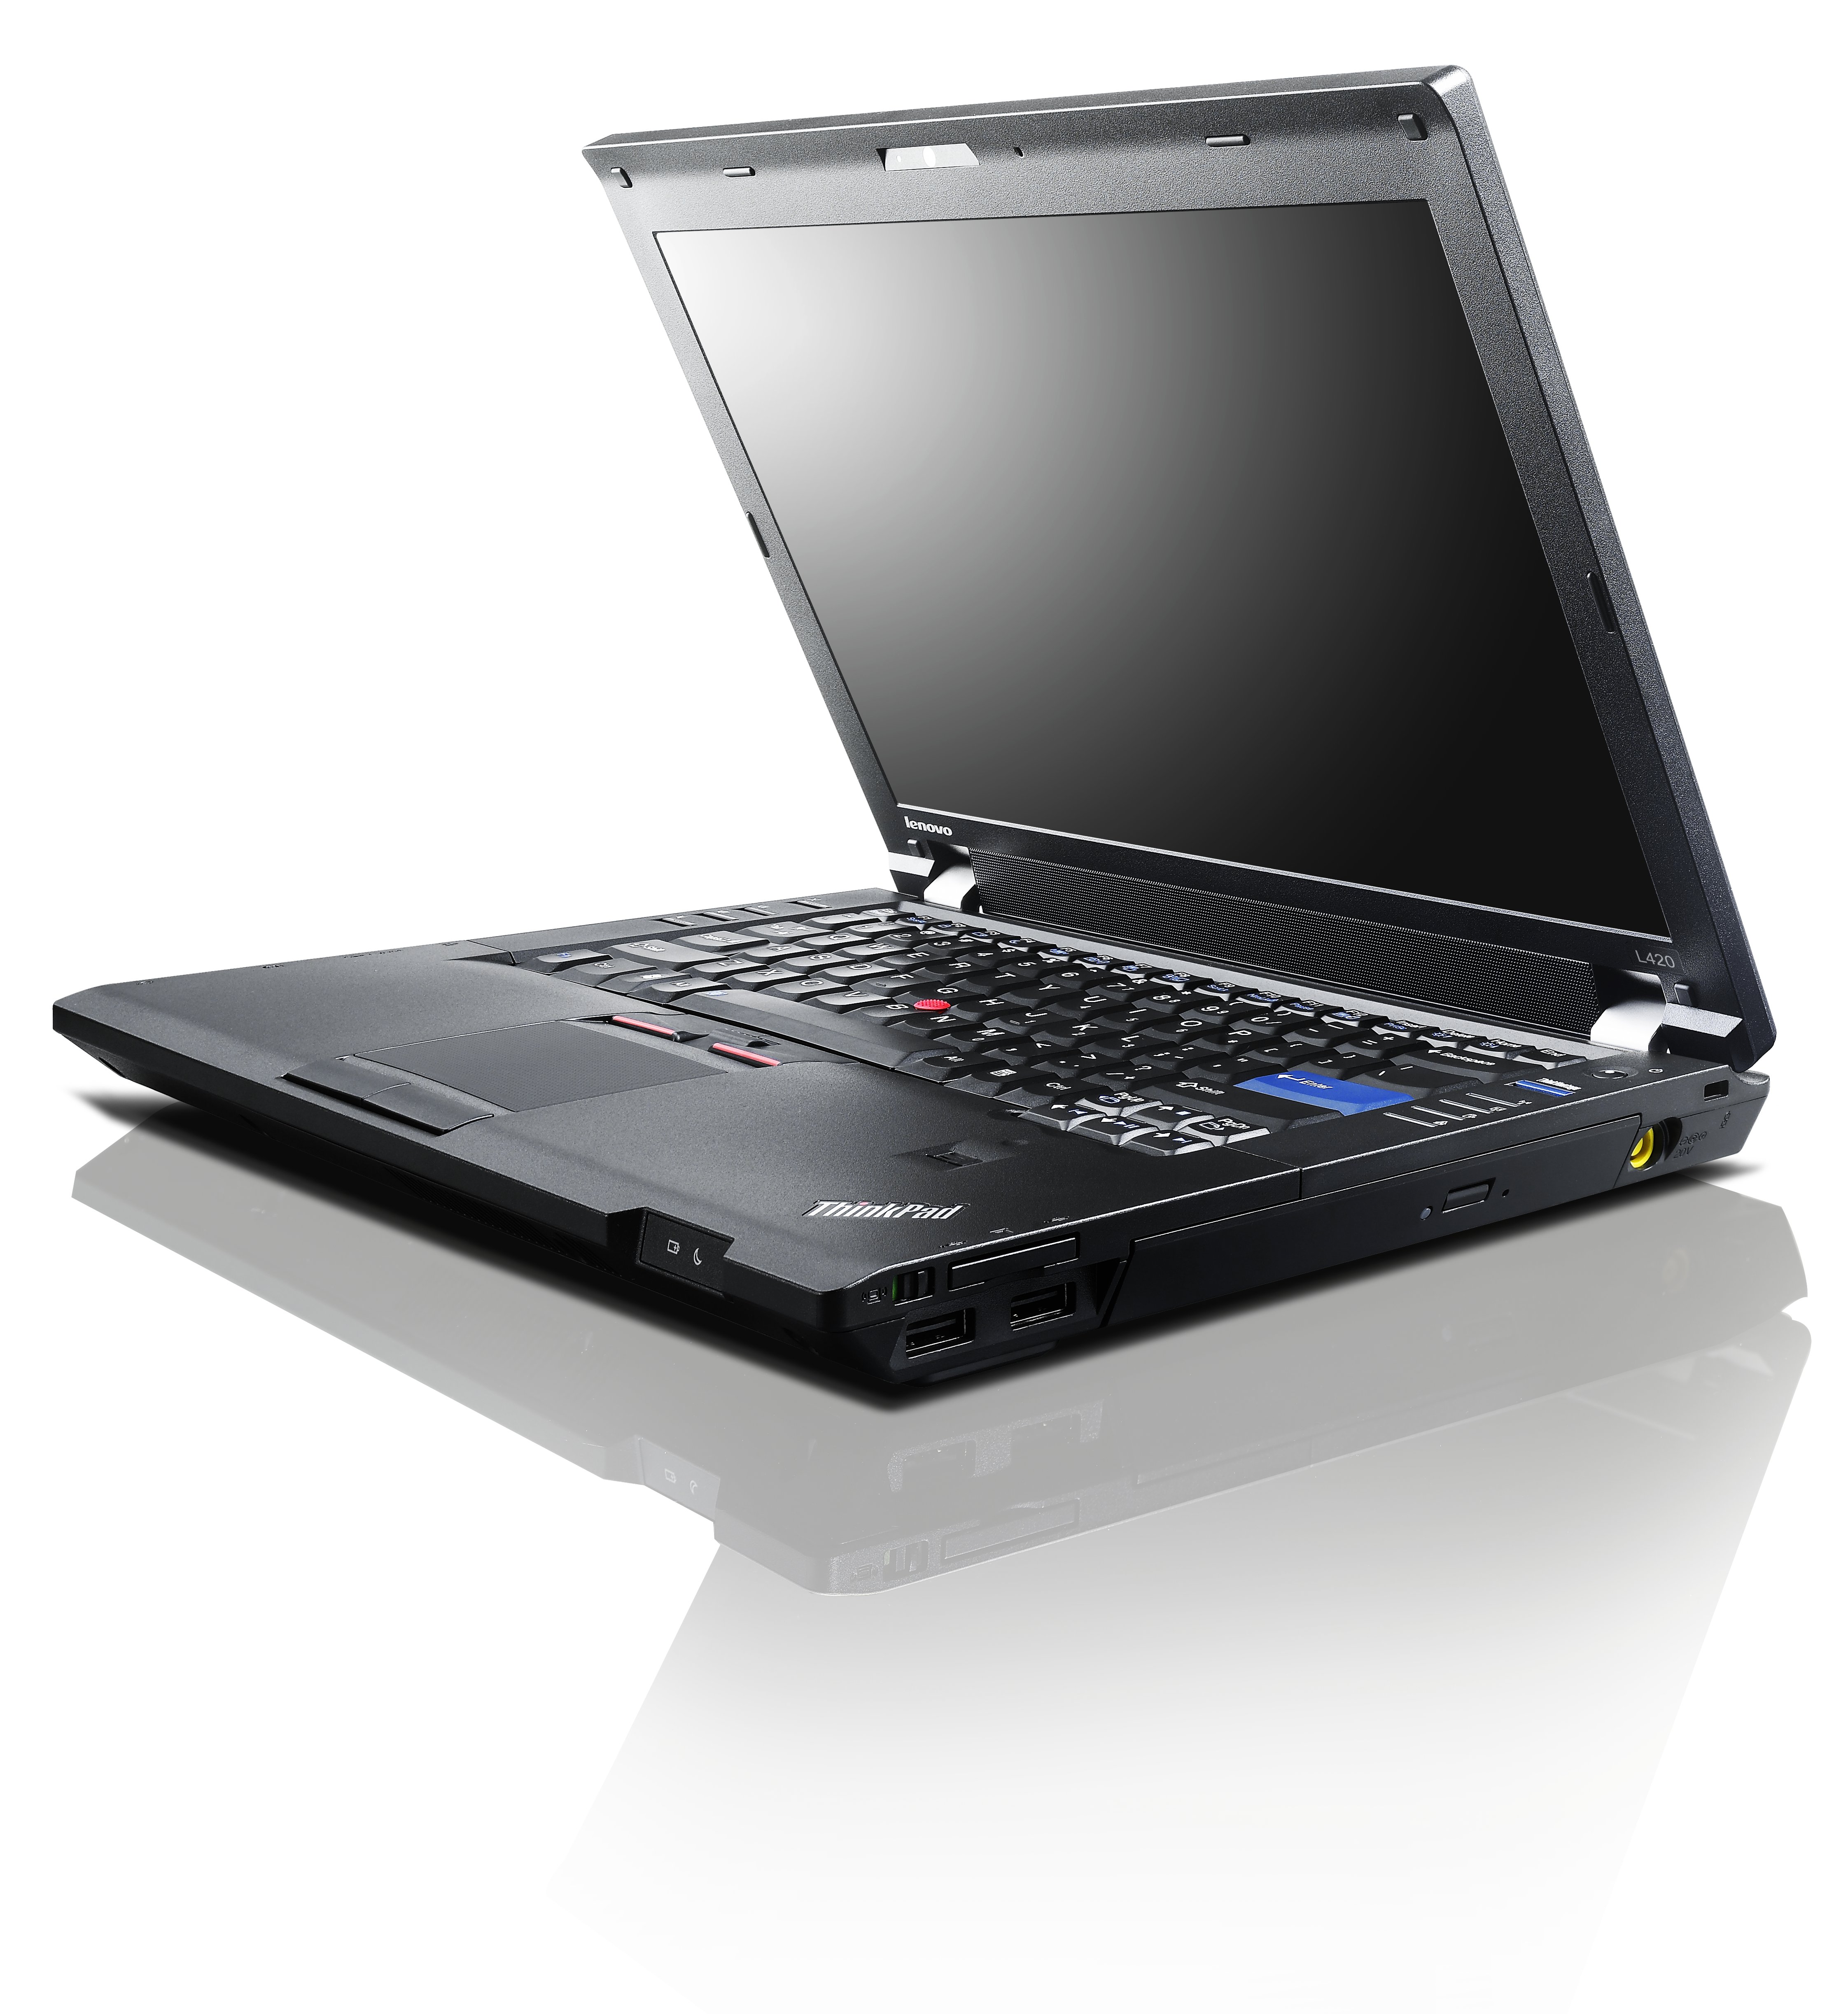 Lenovo ThinkPad L420 Details, Specs and Photos